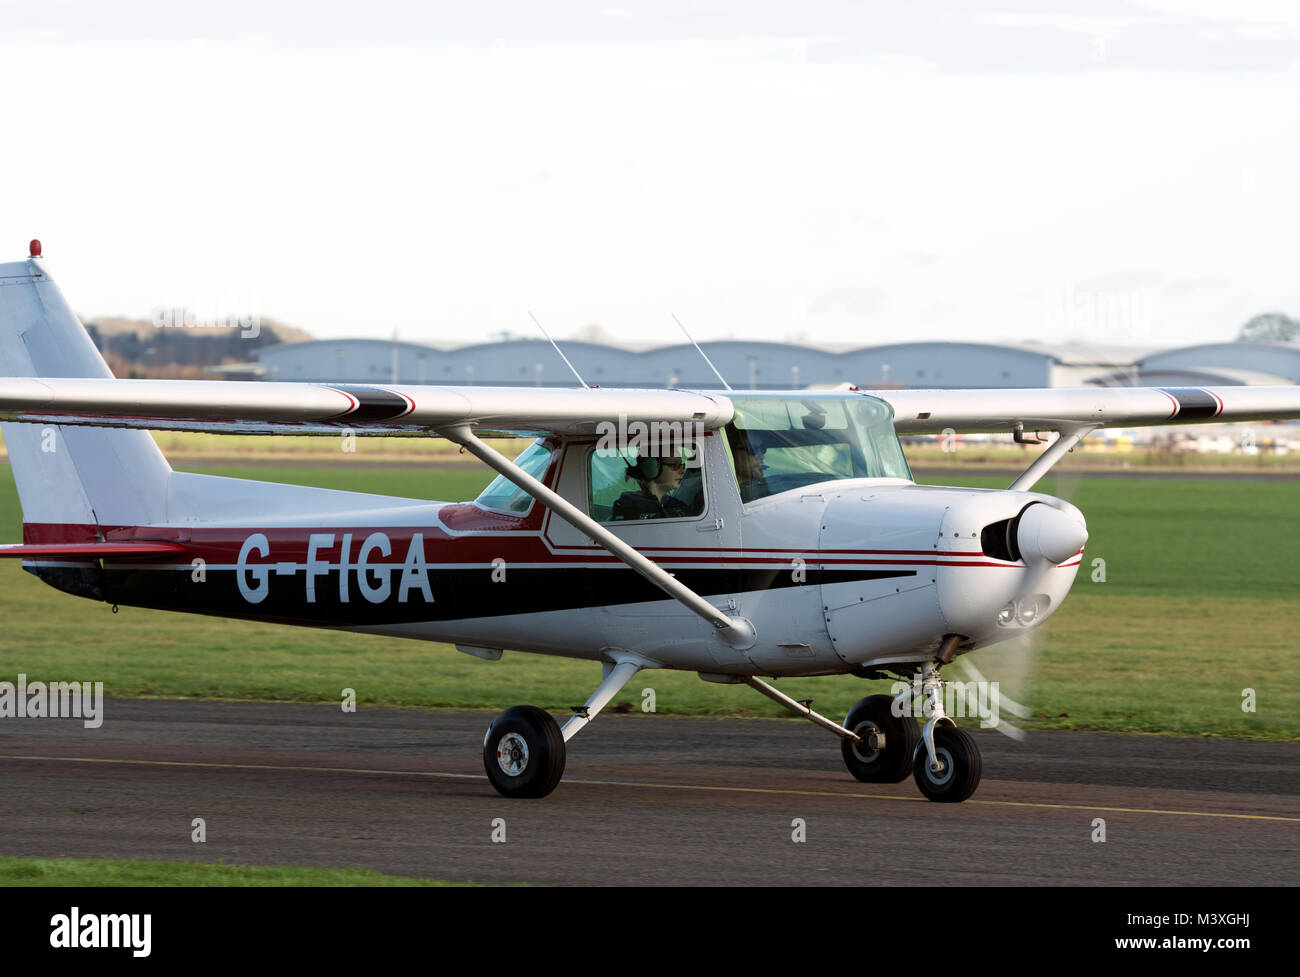 Cessna 152 Wellesbourne Airfield, Warwickshire, UK (G-FIGA) Stockfoto